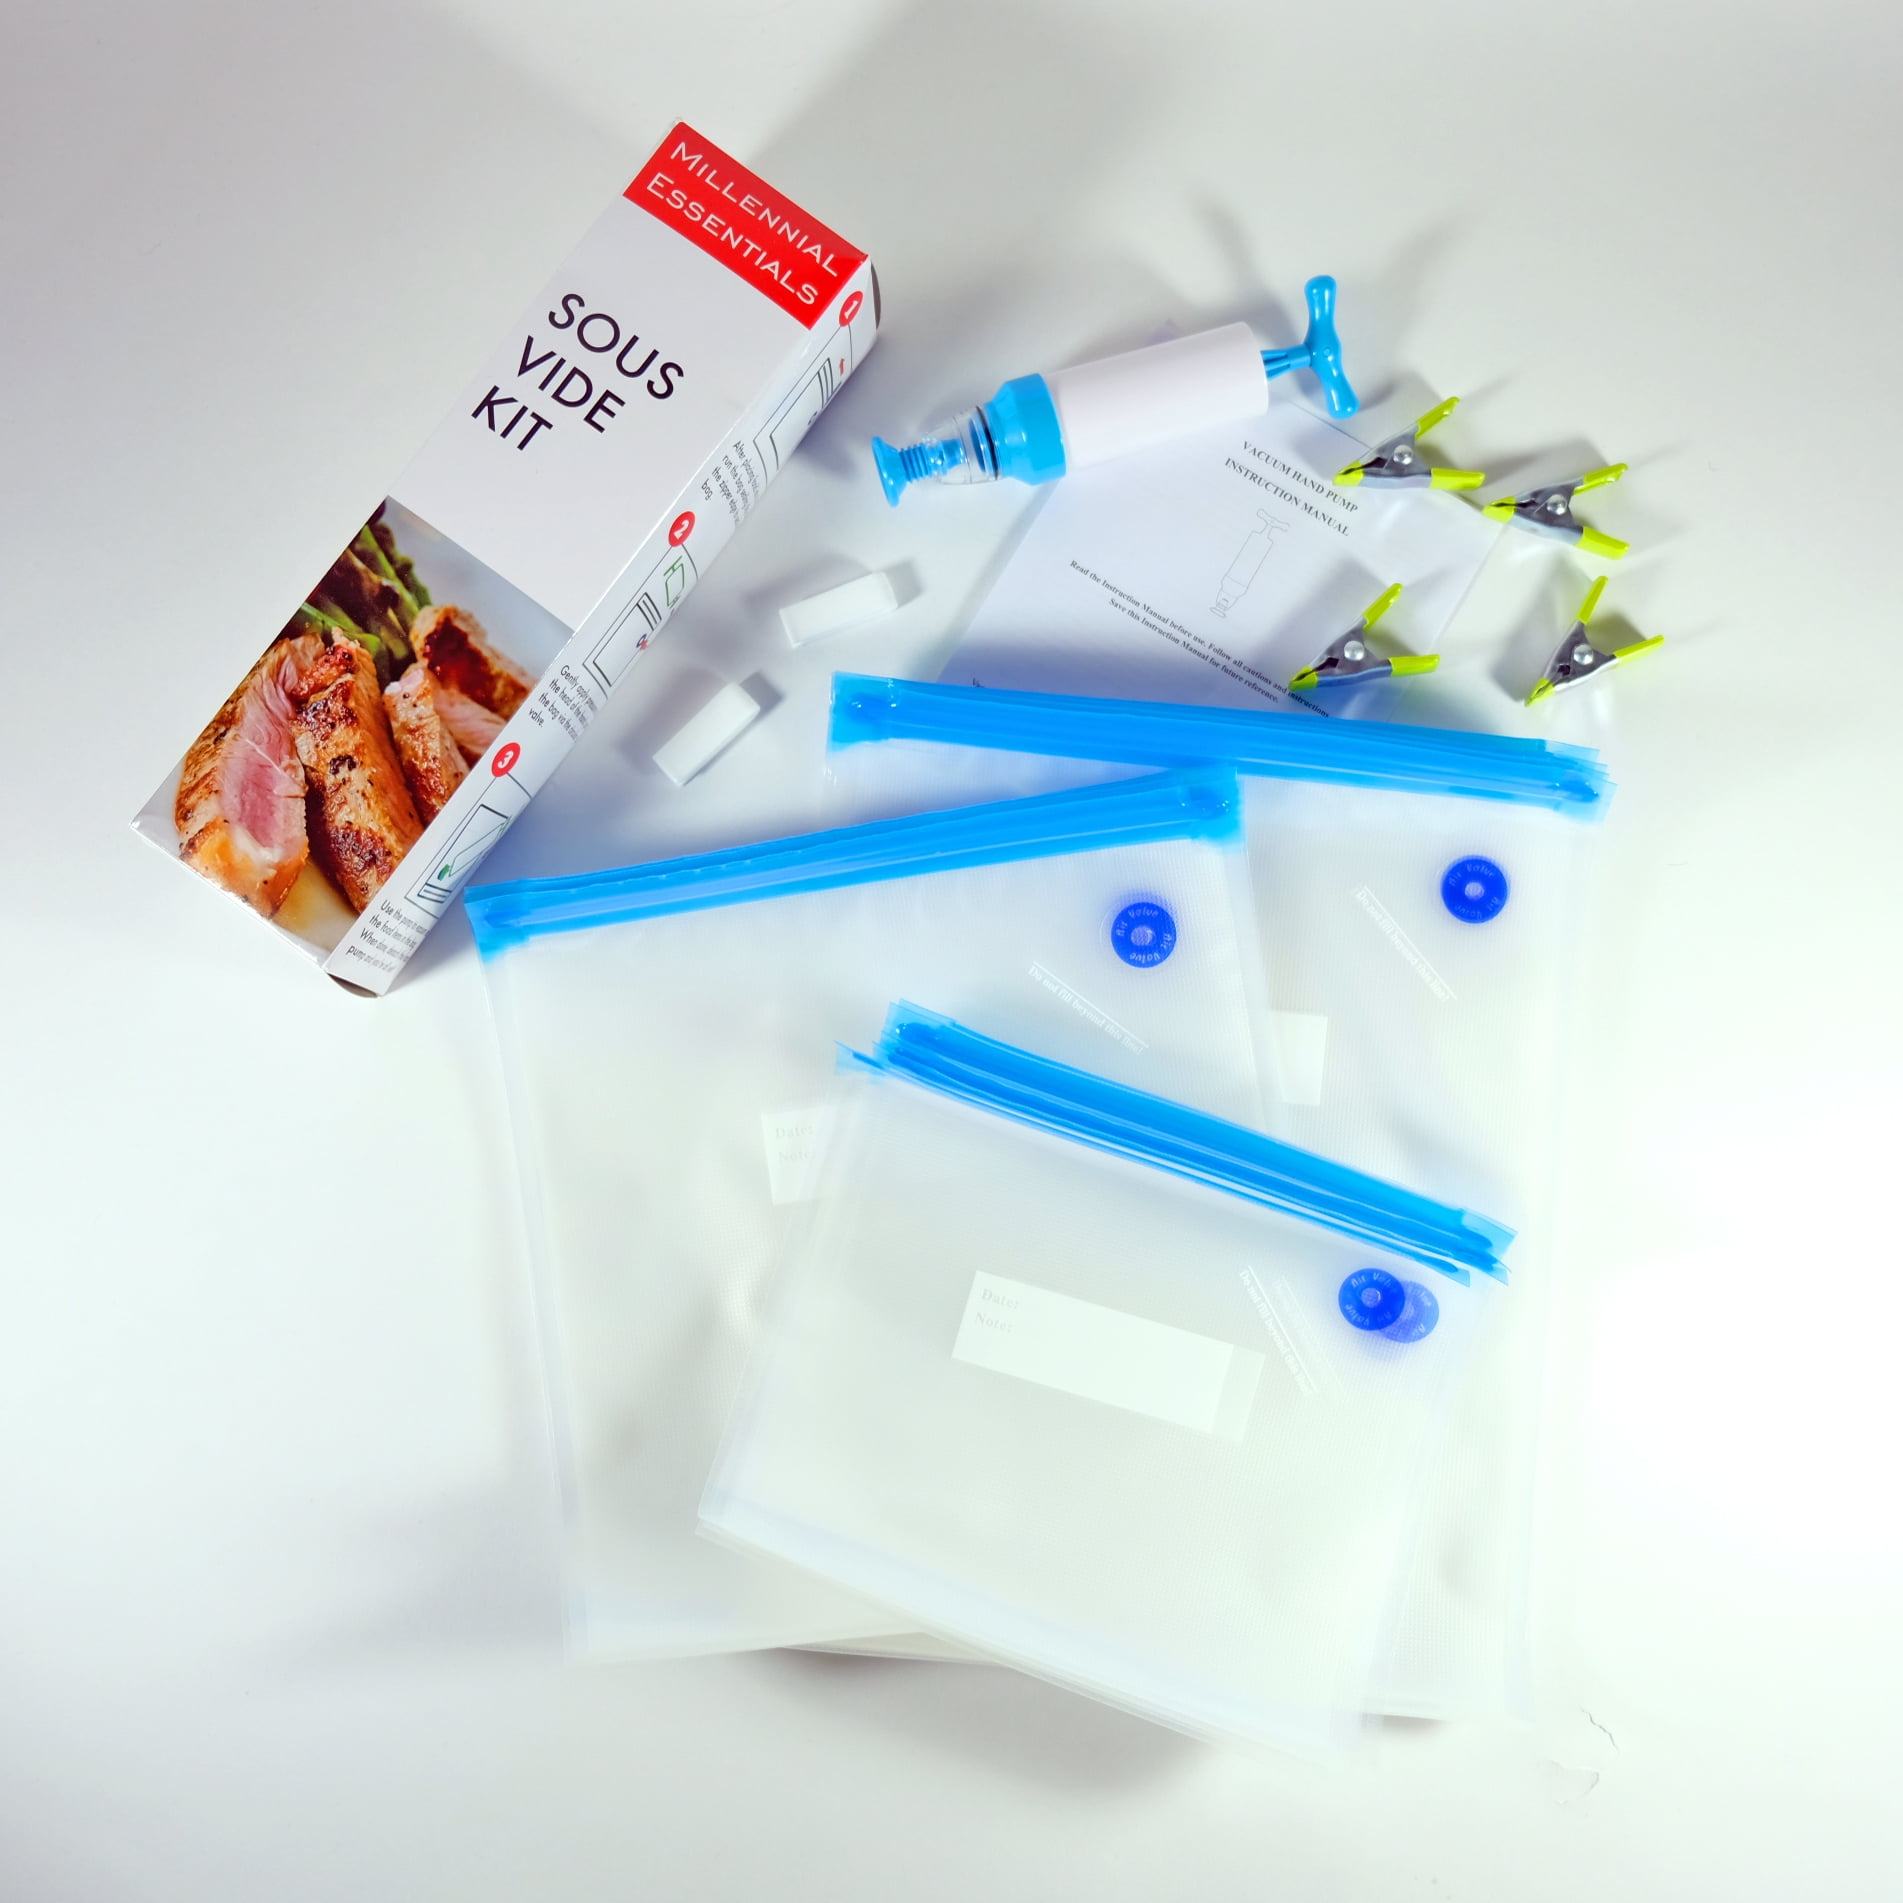 Anova Precision™ Vacuum Sealer Bags – Anova Culinary